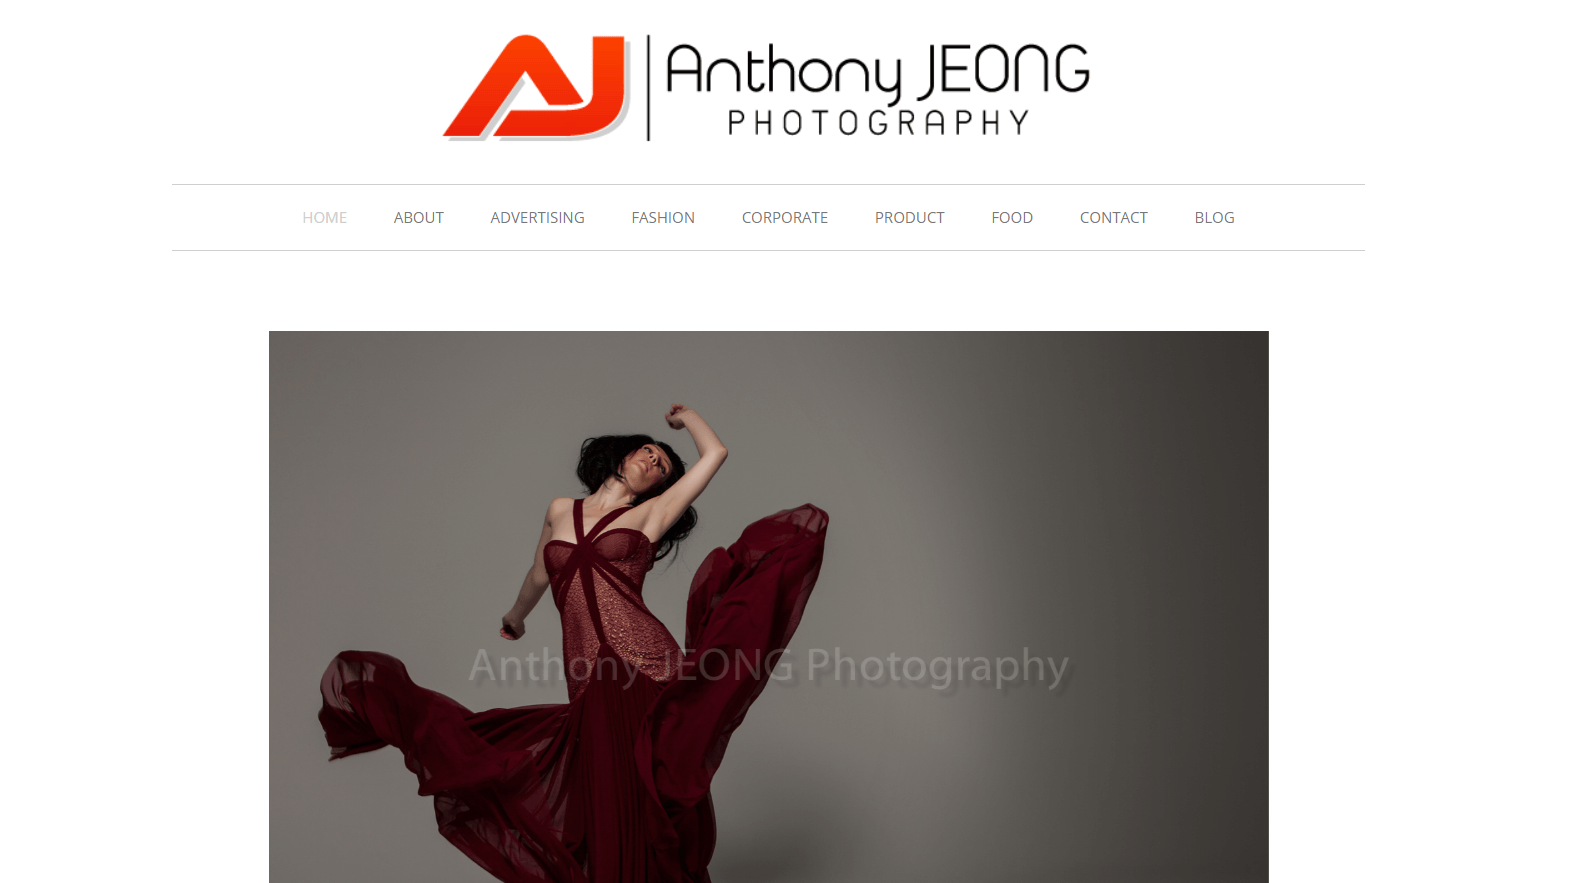 Anthony Jeong Photography